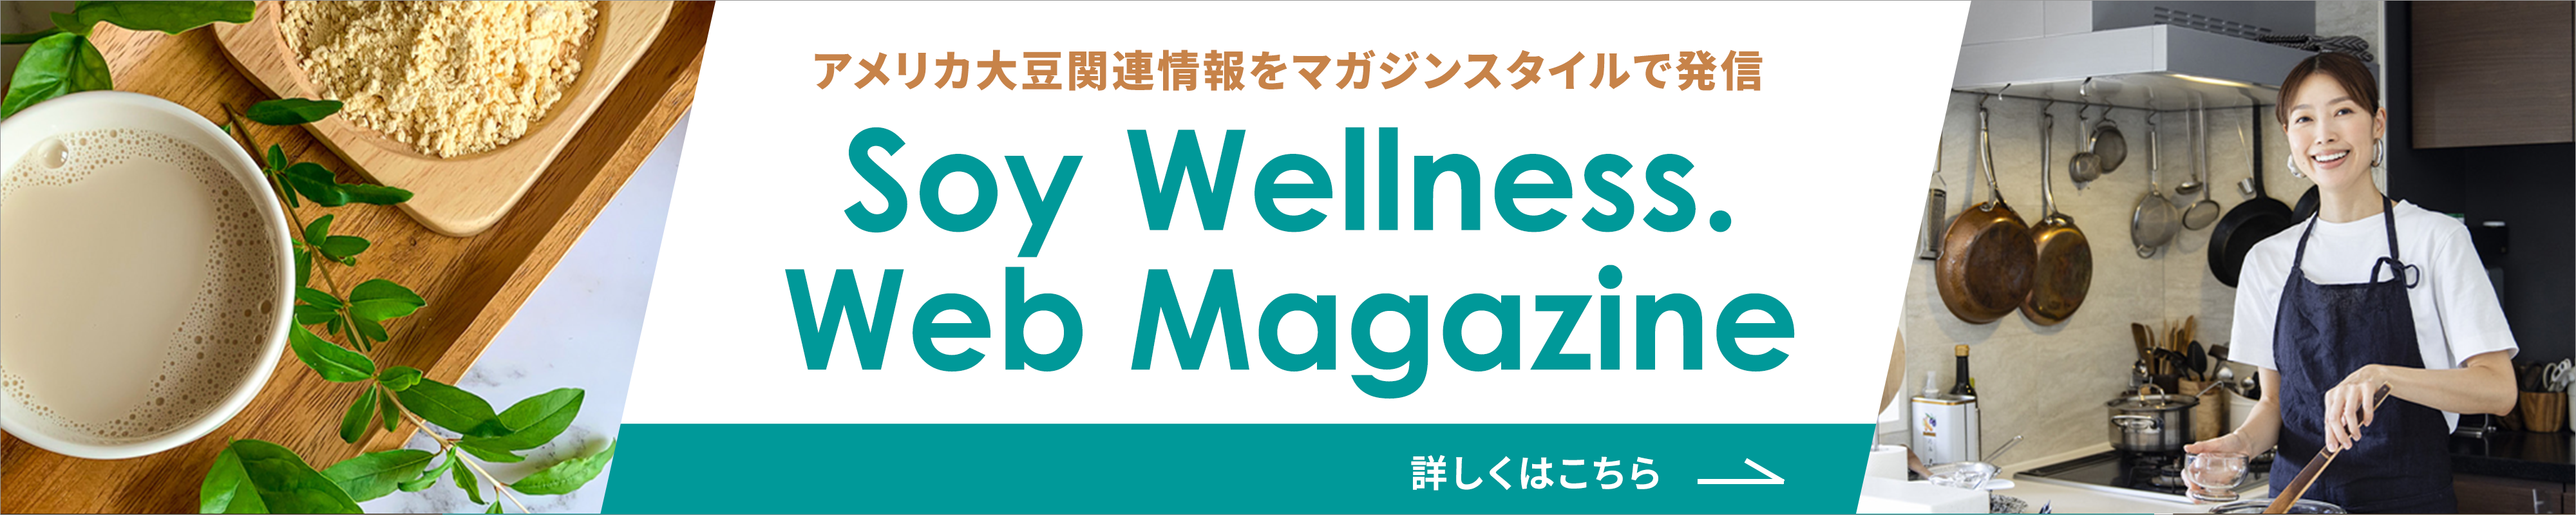 Soy Wellness. Web Magazine